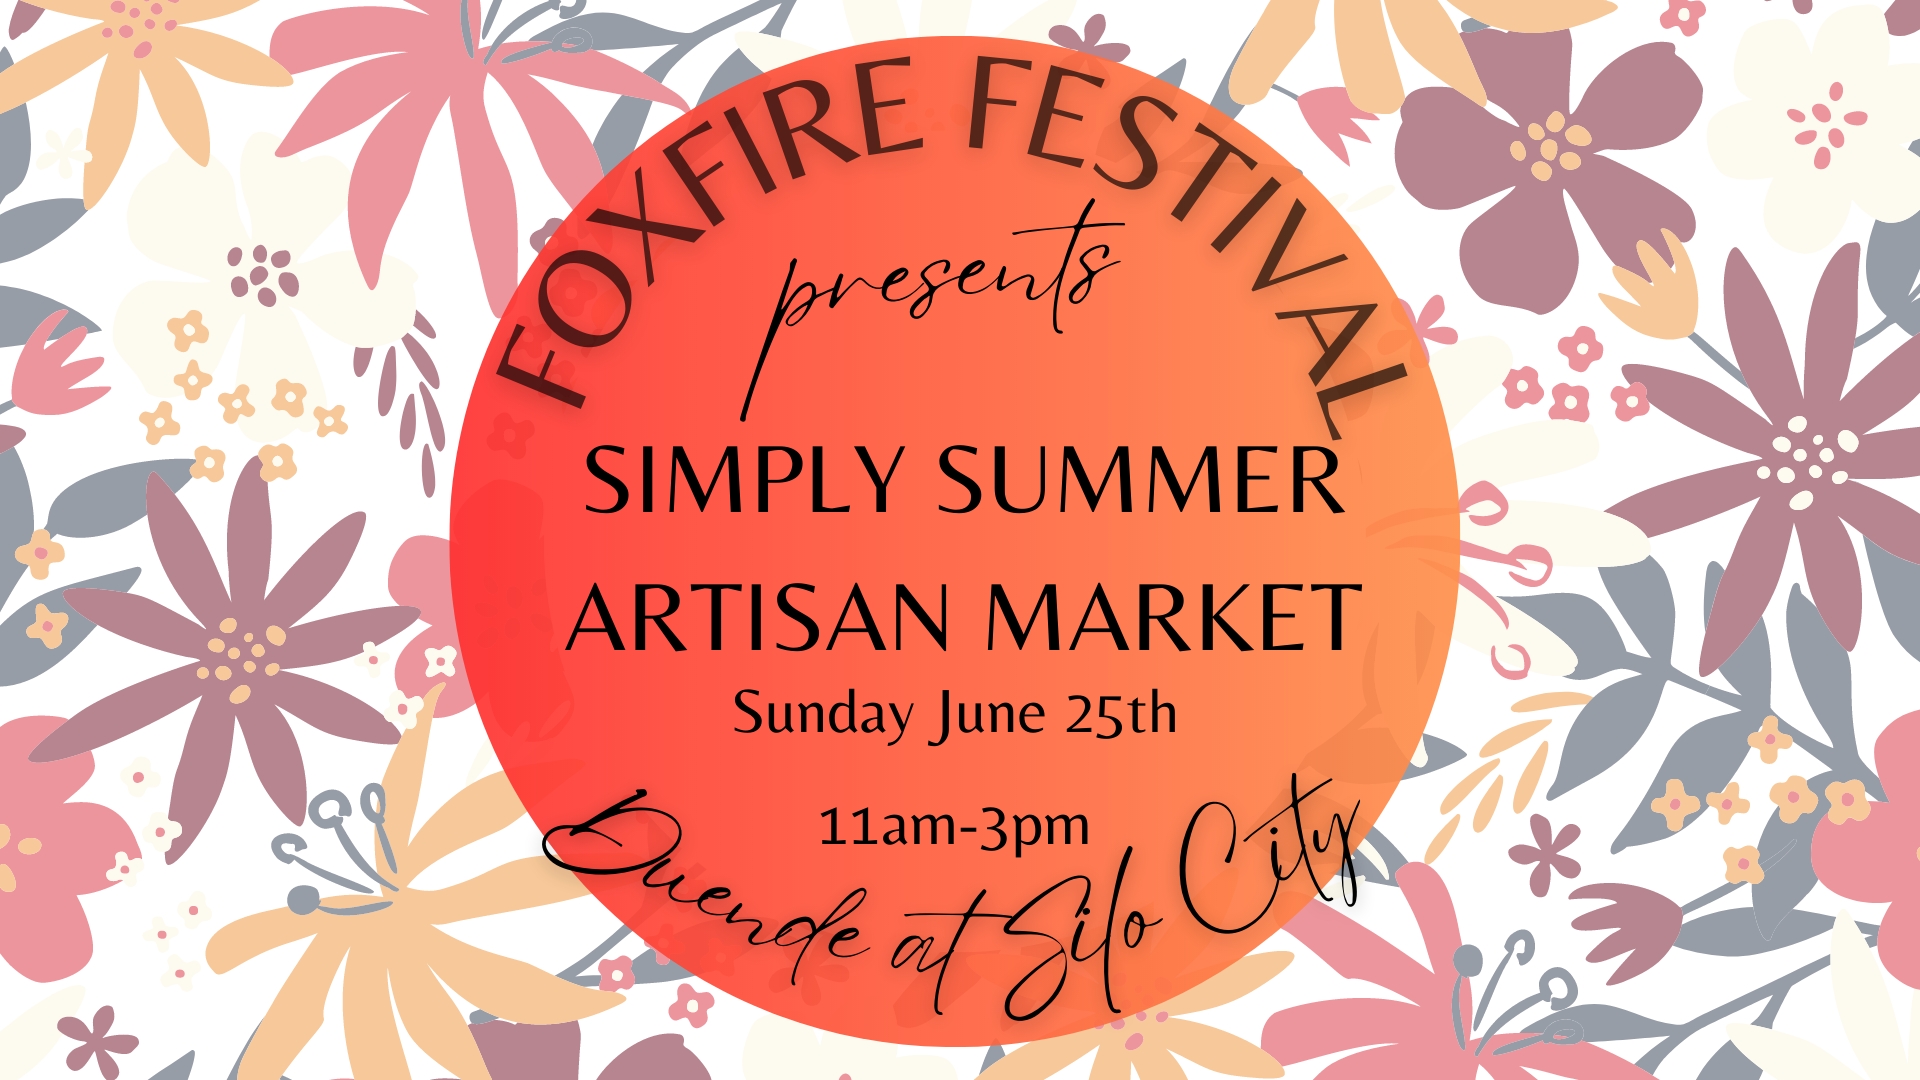 Foxfire Festival Simply Summer Artisan Market